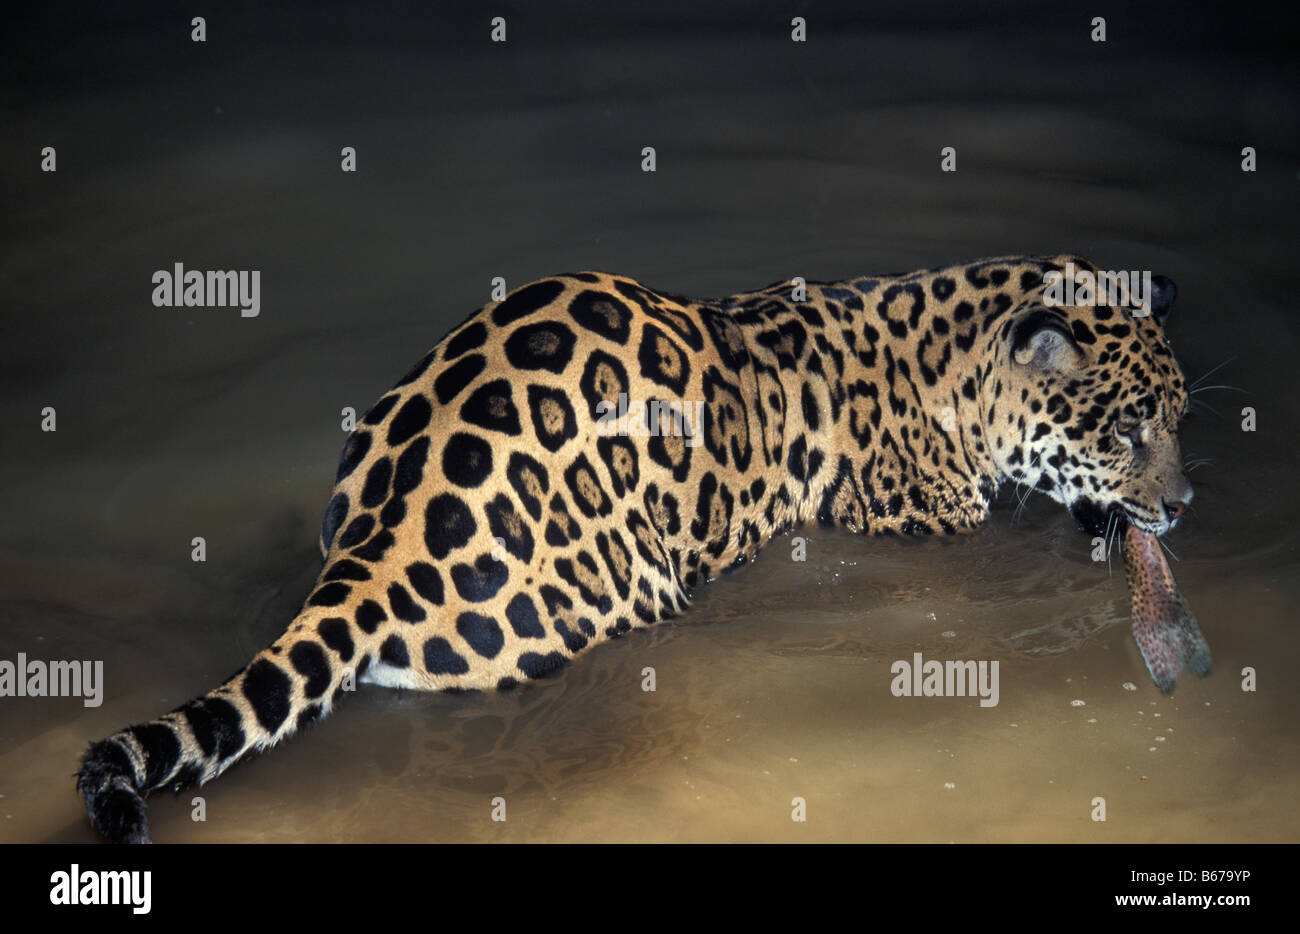 Jaguar Panthera onca walking through water JAGUAR PREYING ON FISH CATCH IN MOUTH PANTHERA ONCA Africa African America American a Stock Photo